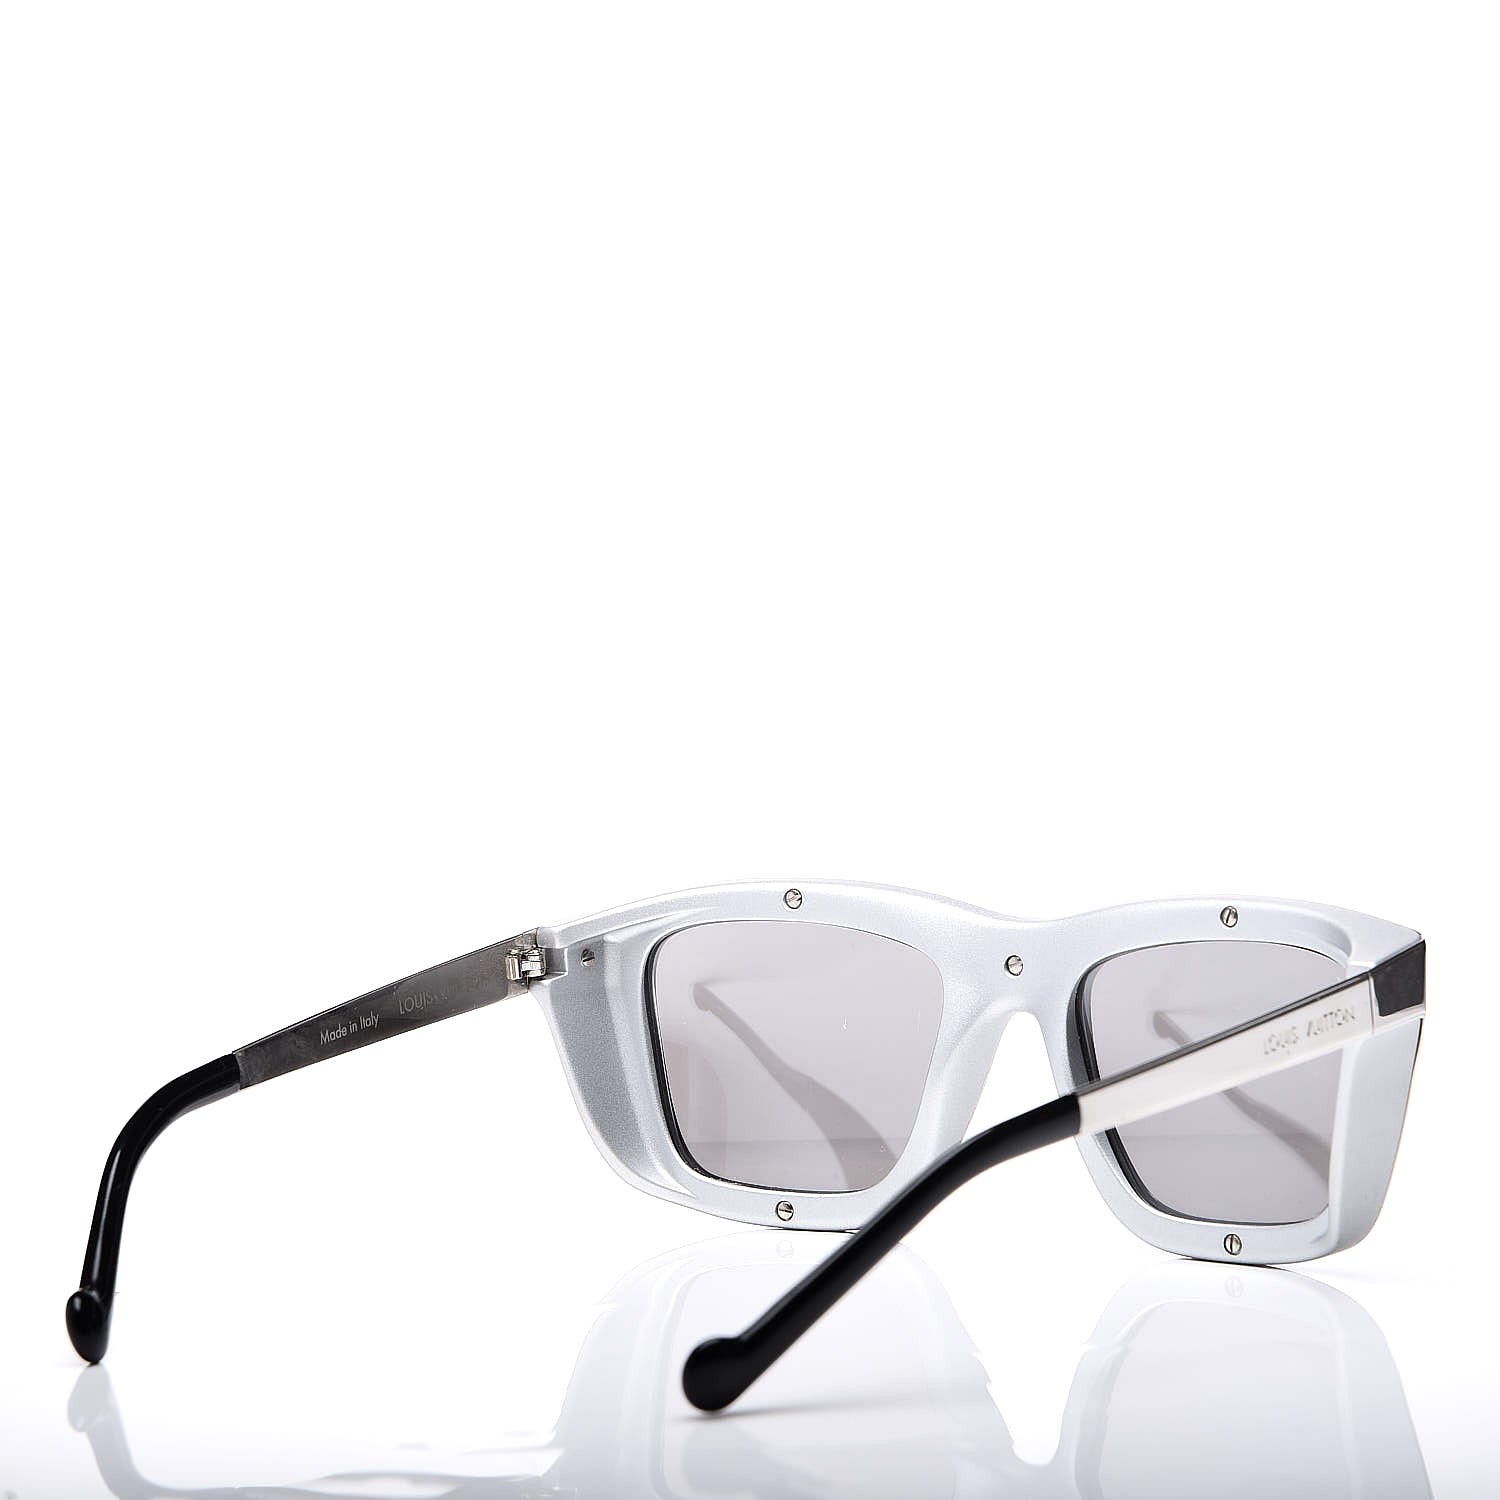 Louis Vuitton Women's Jet Set U Sunglasses